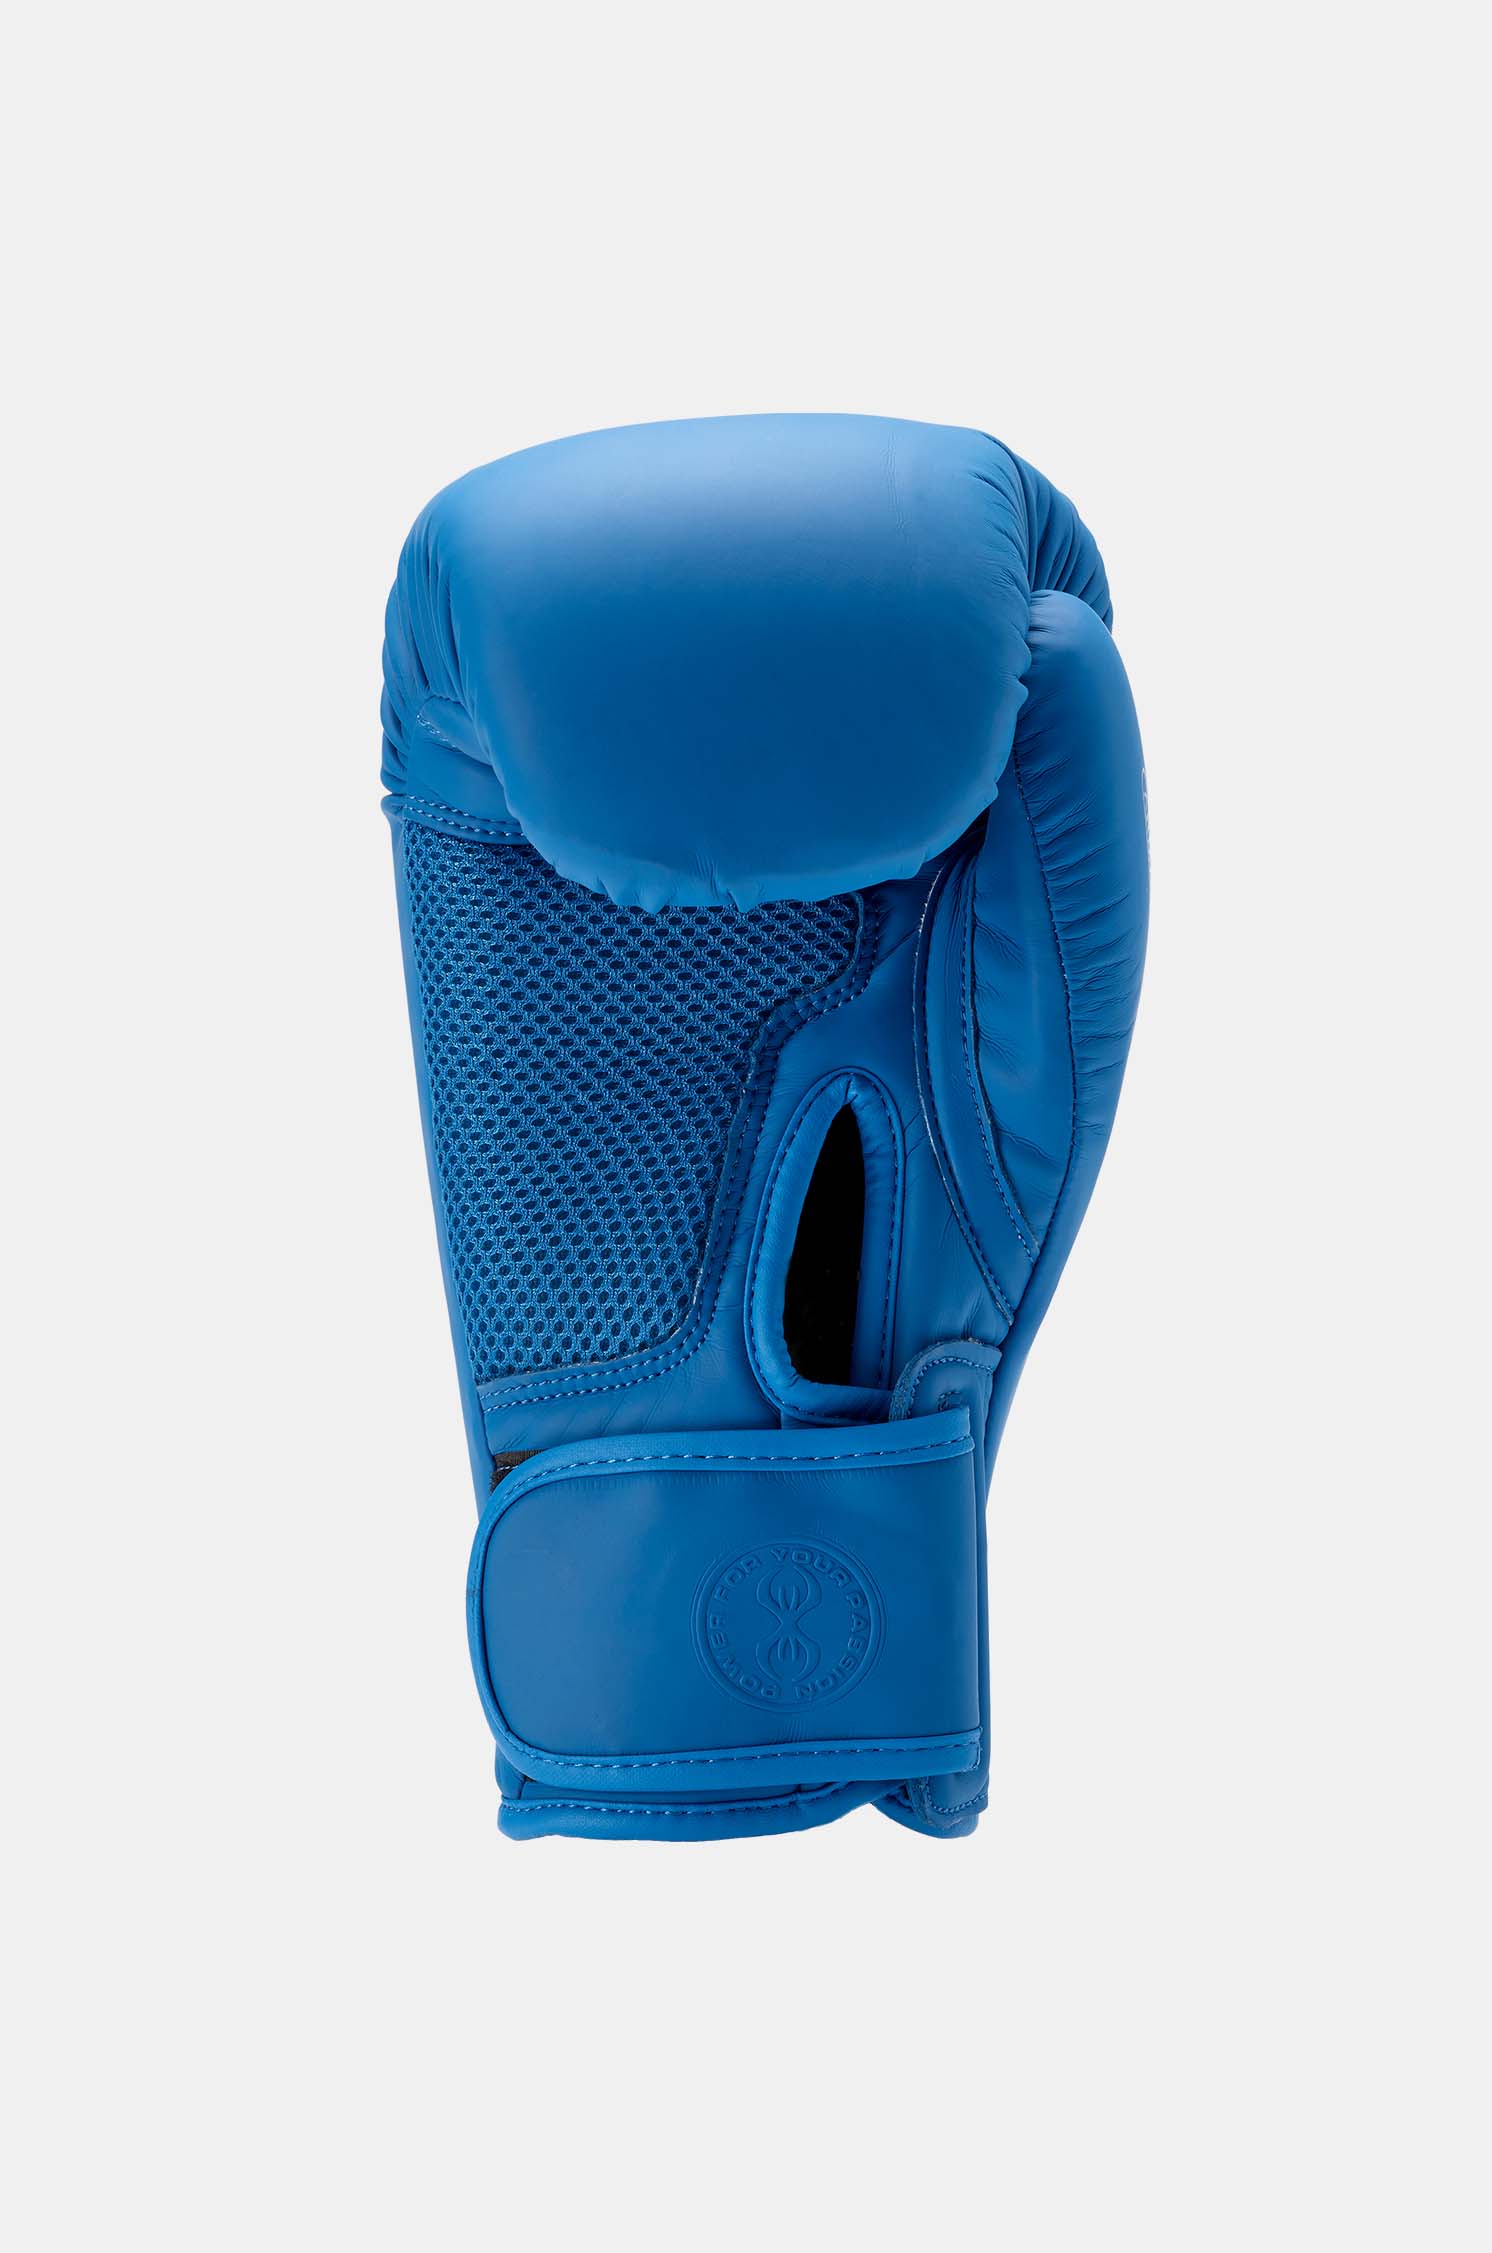 STING Armaone Boxing Glove Blue